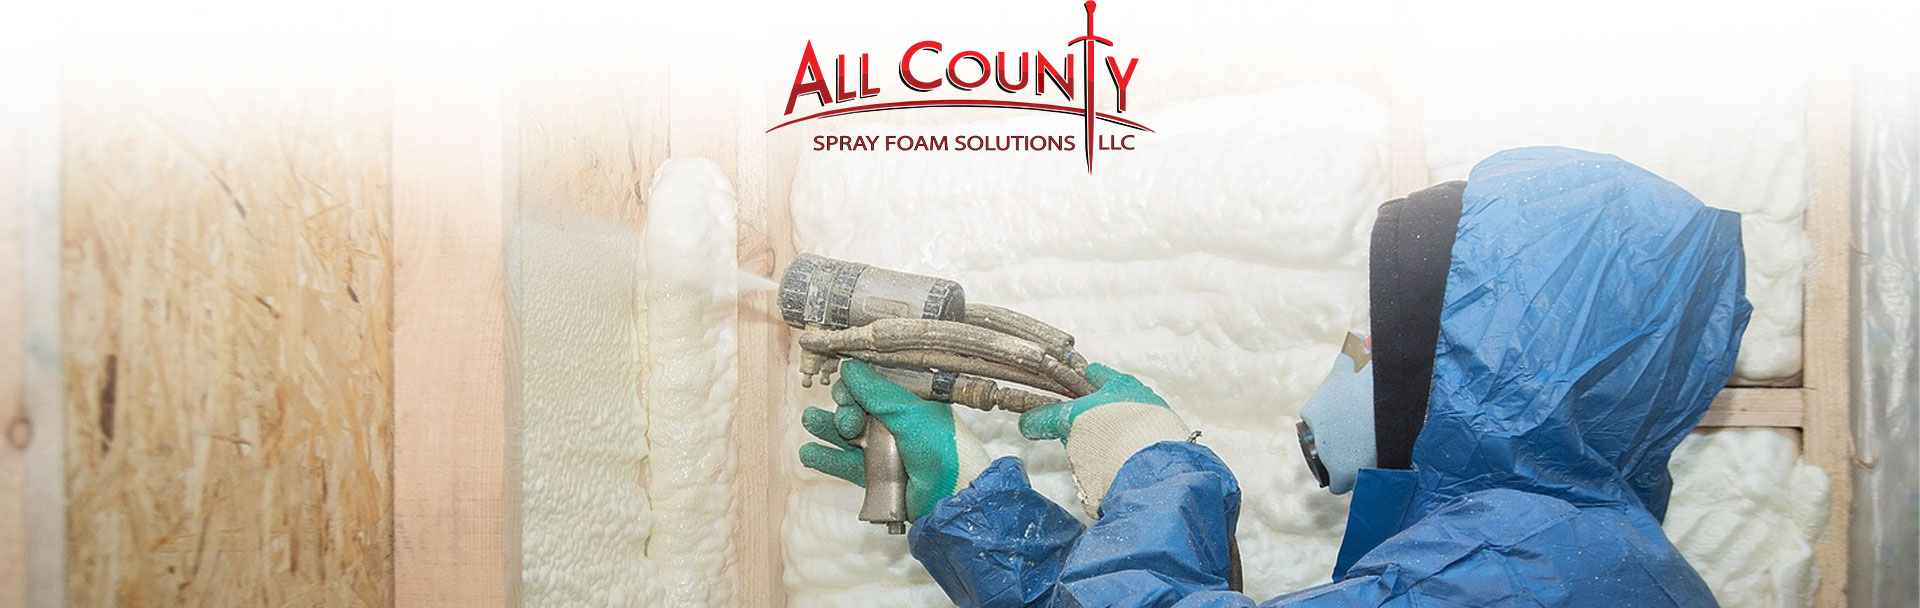 All County Spray Foam Solutions LLC. | Spray Foam, Insulation, SPF Roofing, Polyurea Coating, Attic Spray Foam Insulation, Wall Spray Foam Insulation, Crawl Space Spray Foam Insulation, Basement Spray Foam Insulation, Concrete Lifting, Void Filling, Moisture Issues | (NYC) Manhattan, Long Island, Brooklyn, Bronx, Queens, NY | 516.442.4222 | Email: ACSprayFoam@gmail.com - footer image with All County logo